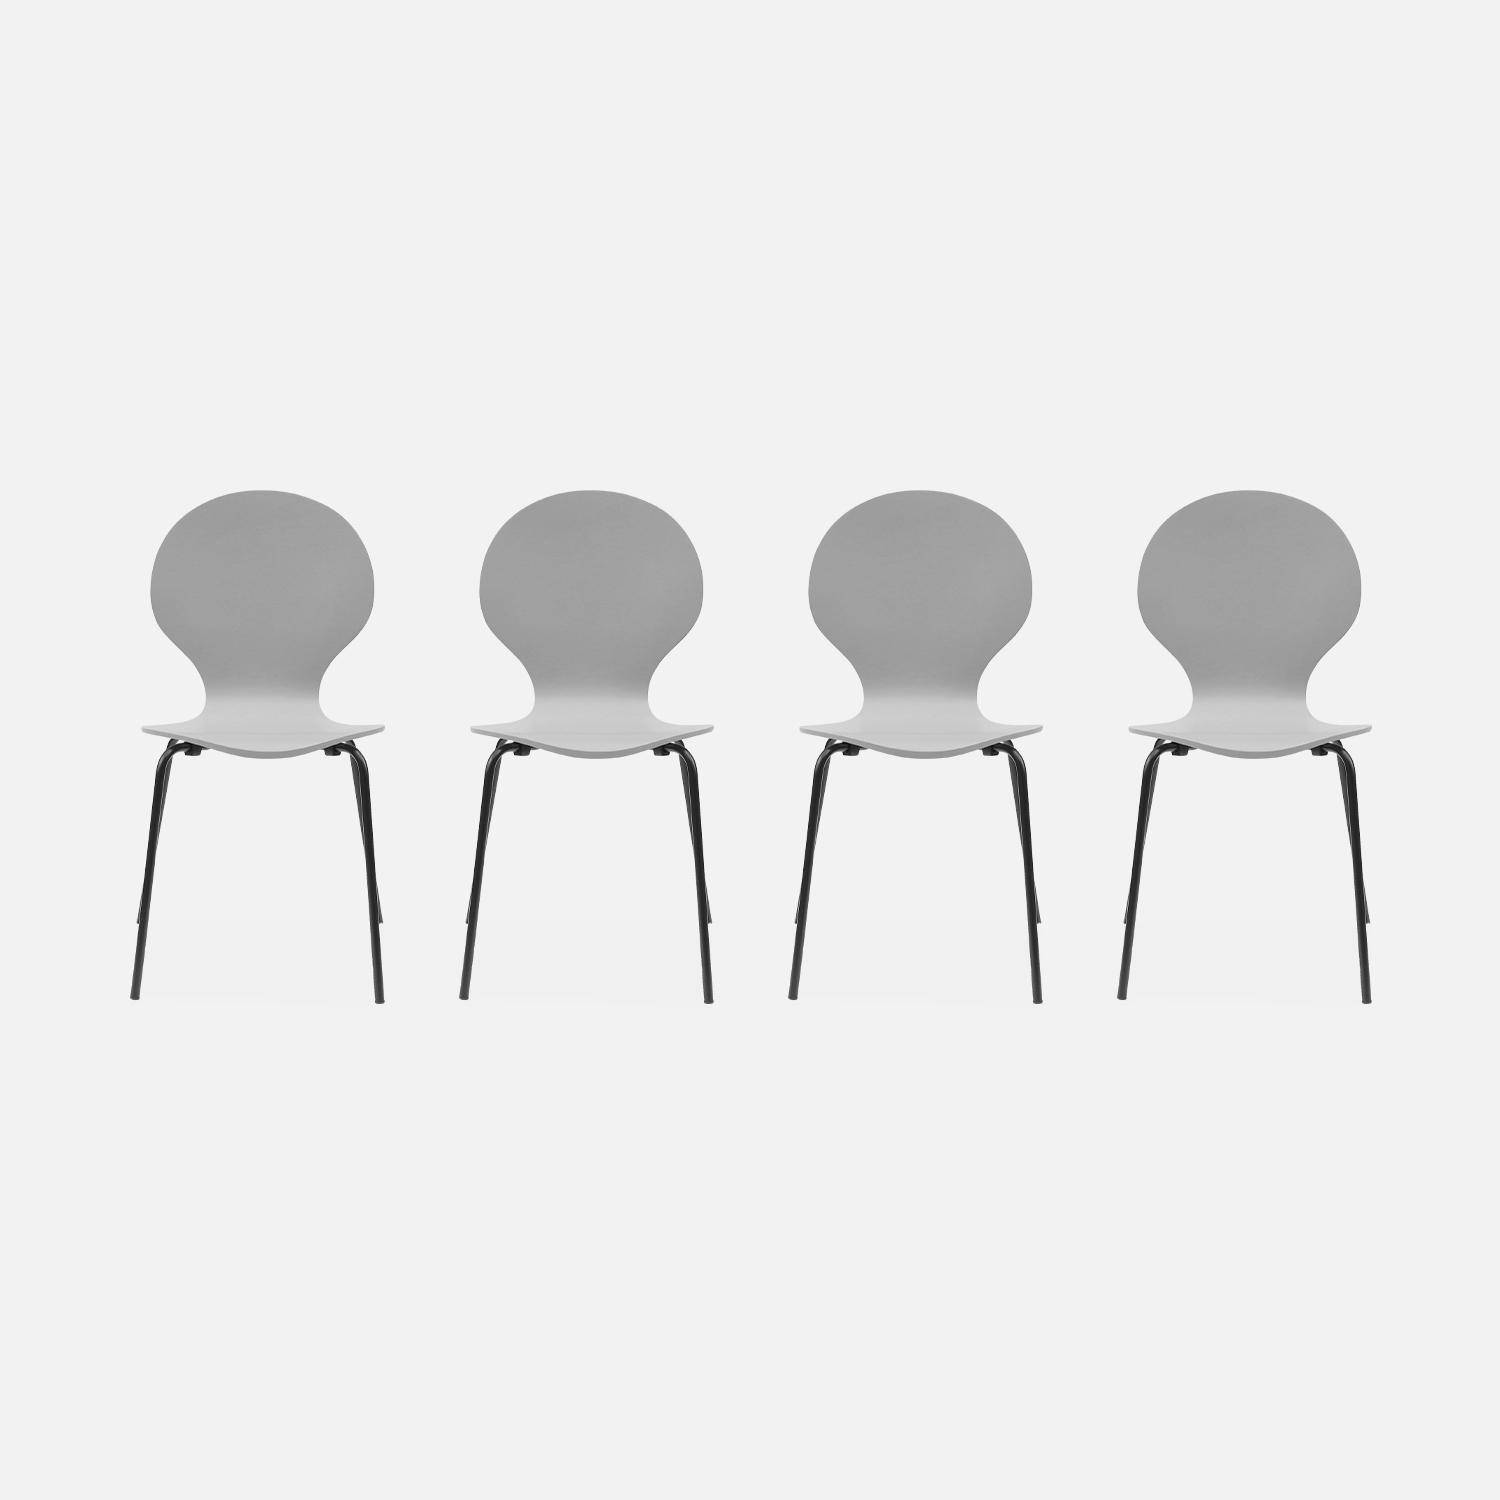 4er Set stapelbare Retro-Stühle in grau, Hevea-Holz und Sperrholz, Stahlbeine, Naomi, B 43 x T 48 x H 87cm,sweeek,Photo3